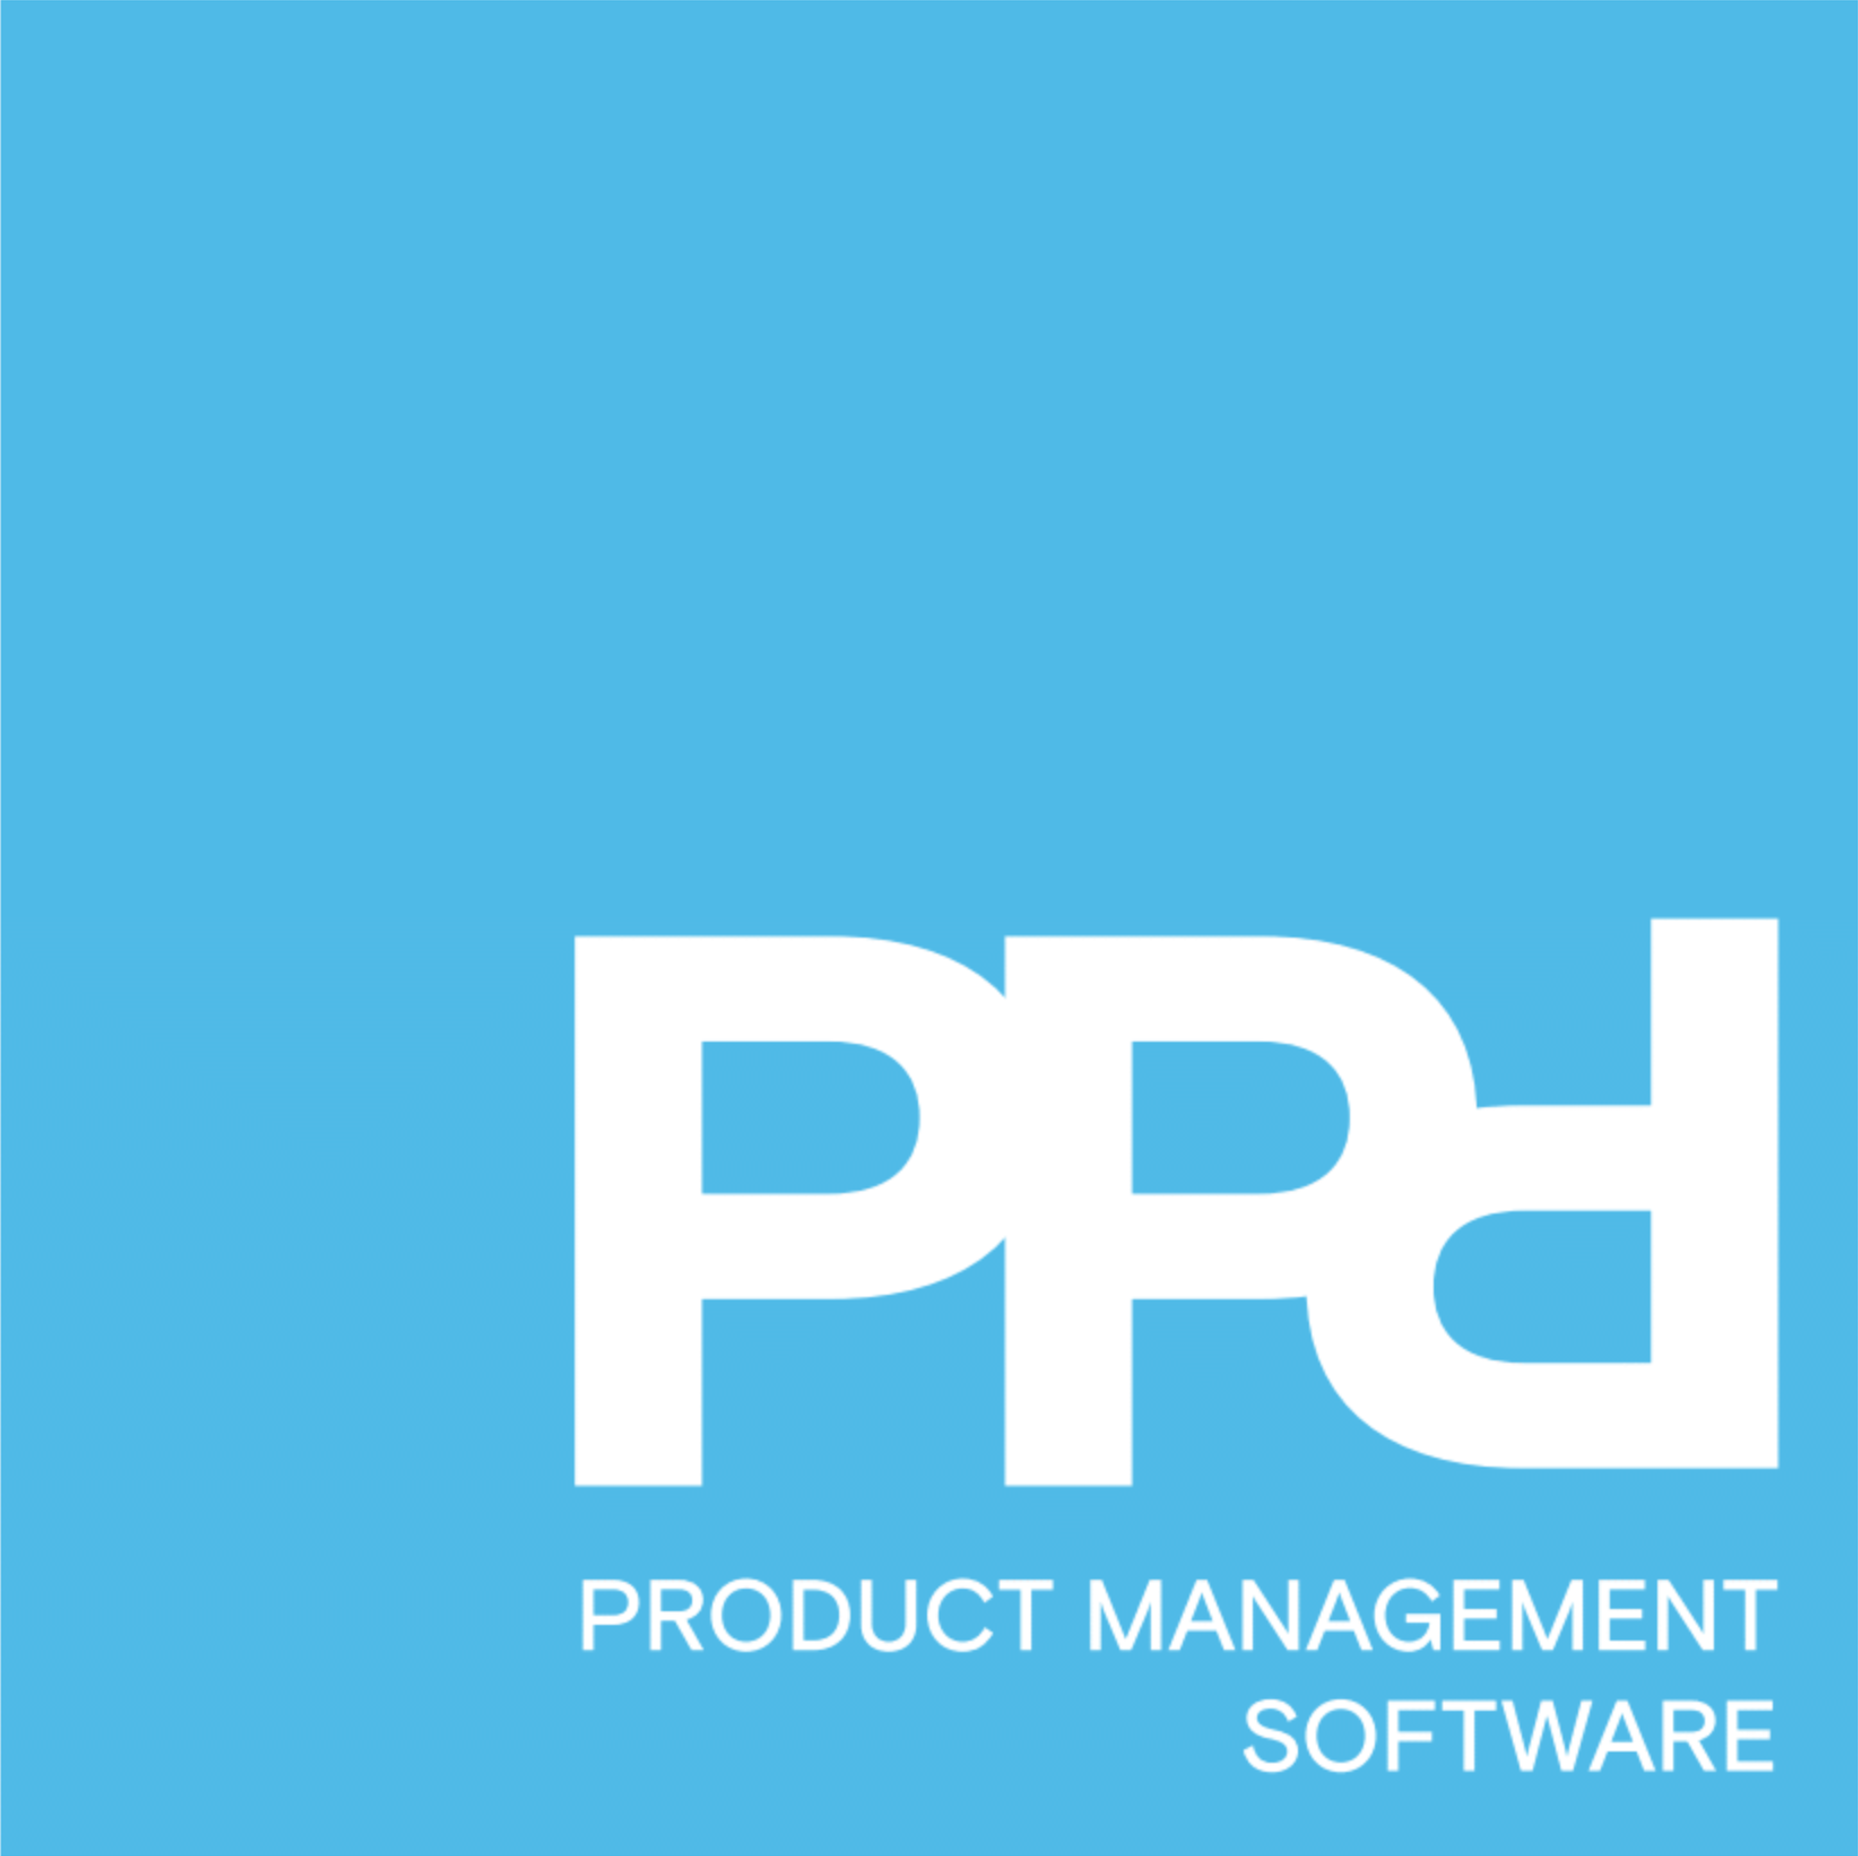 PPd Logo